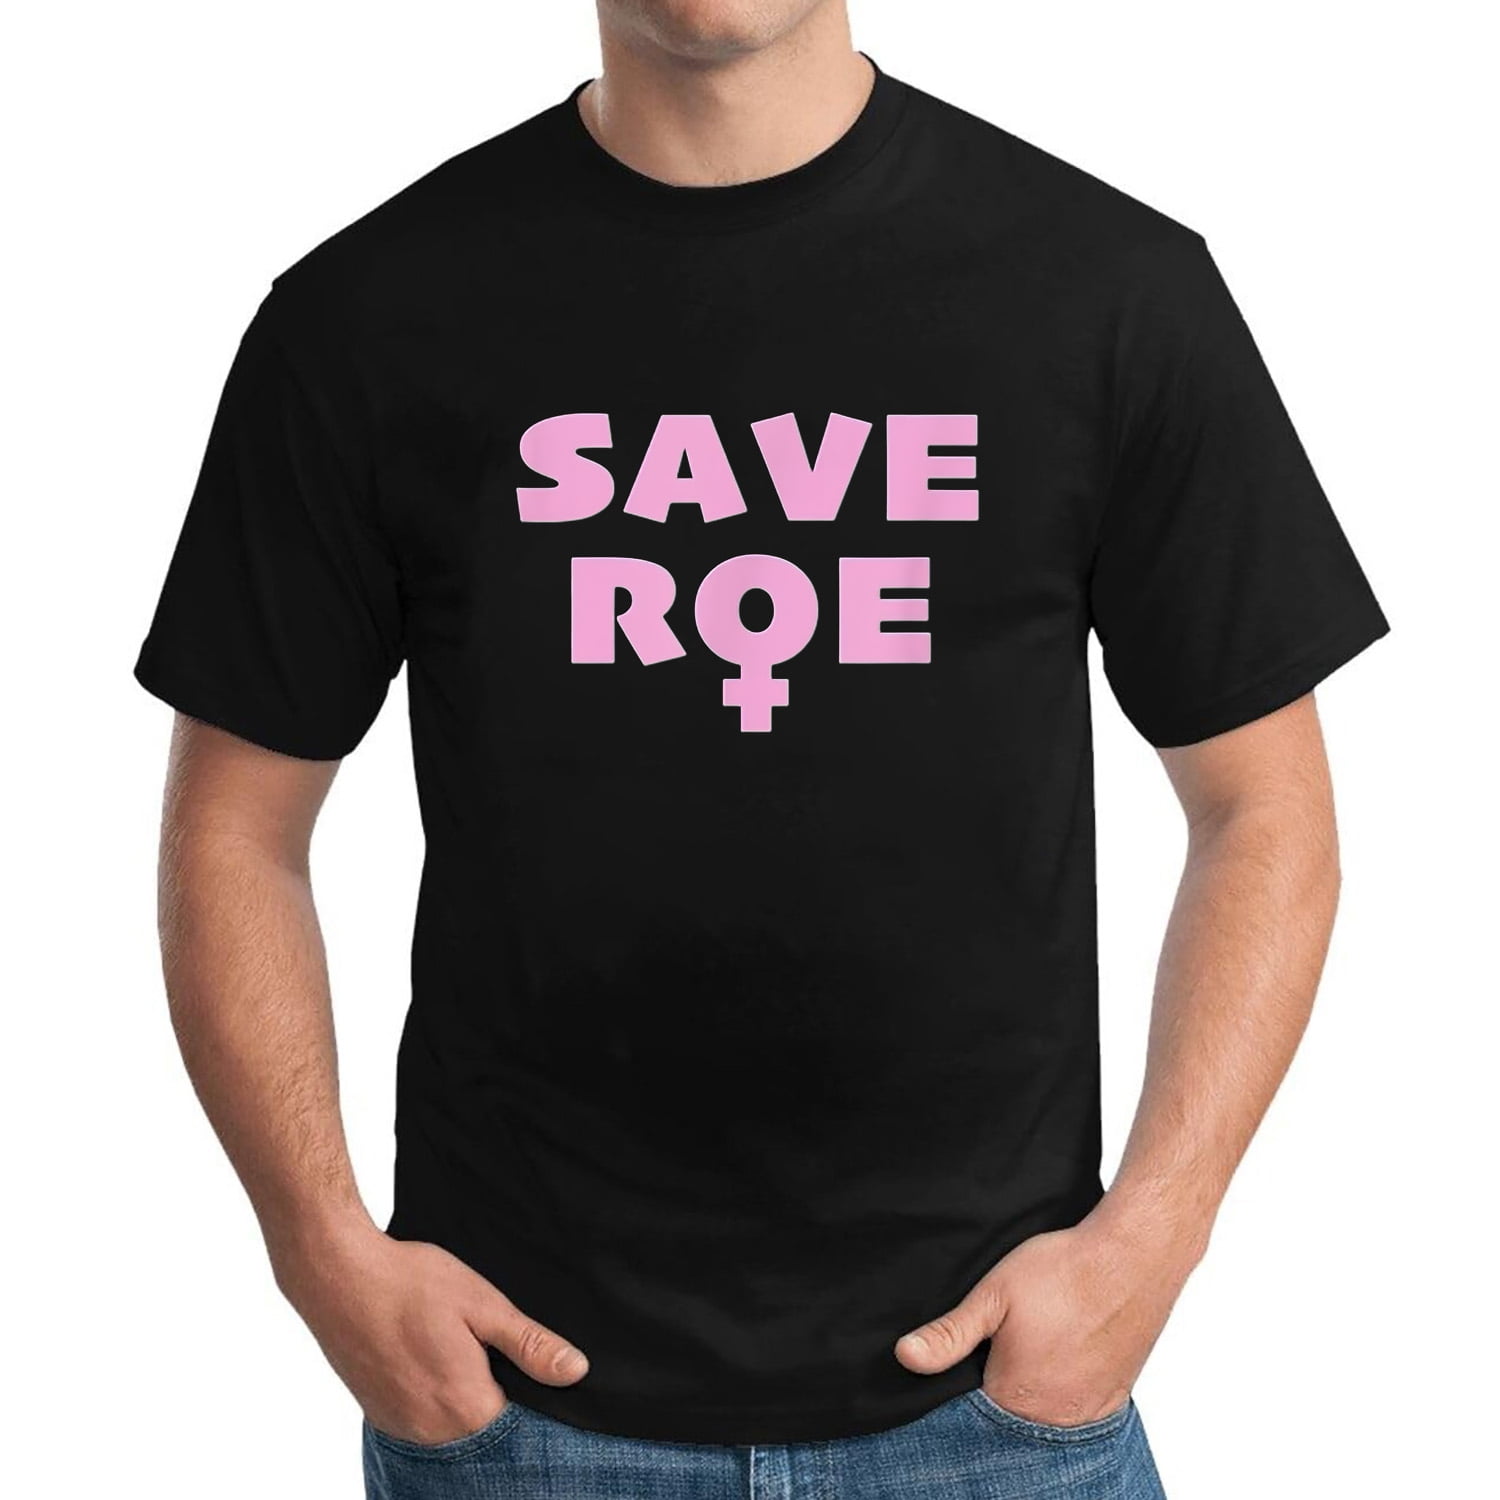 Mens T Shirt Save Roe! Roe v. Wade Pro-Choice with Female Symbol Tee Black  2X-Large 